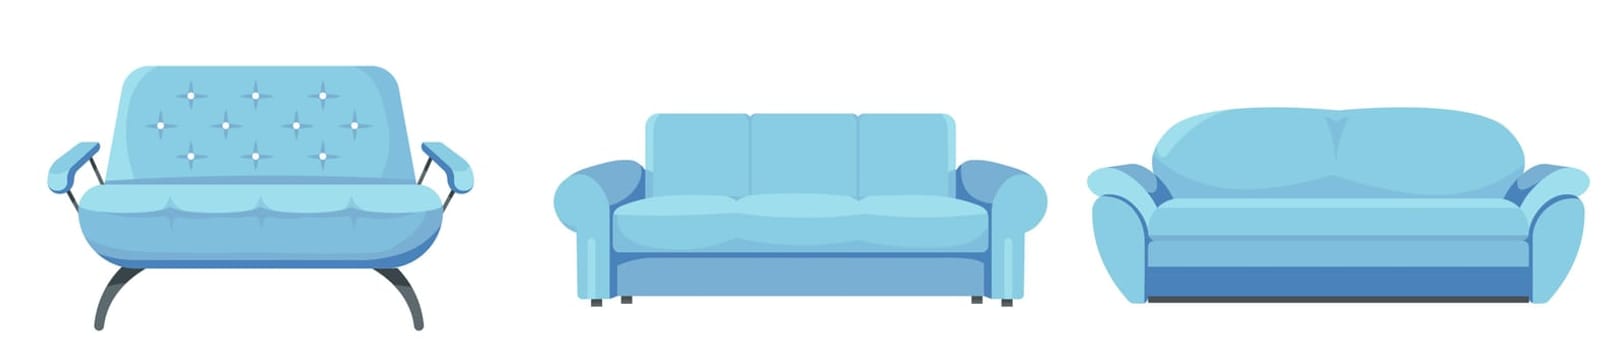 Modern sofa for living room, interior designing